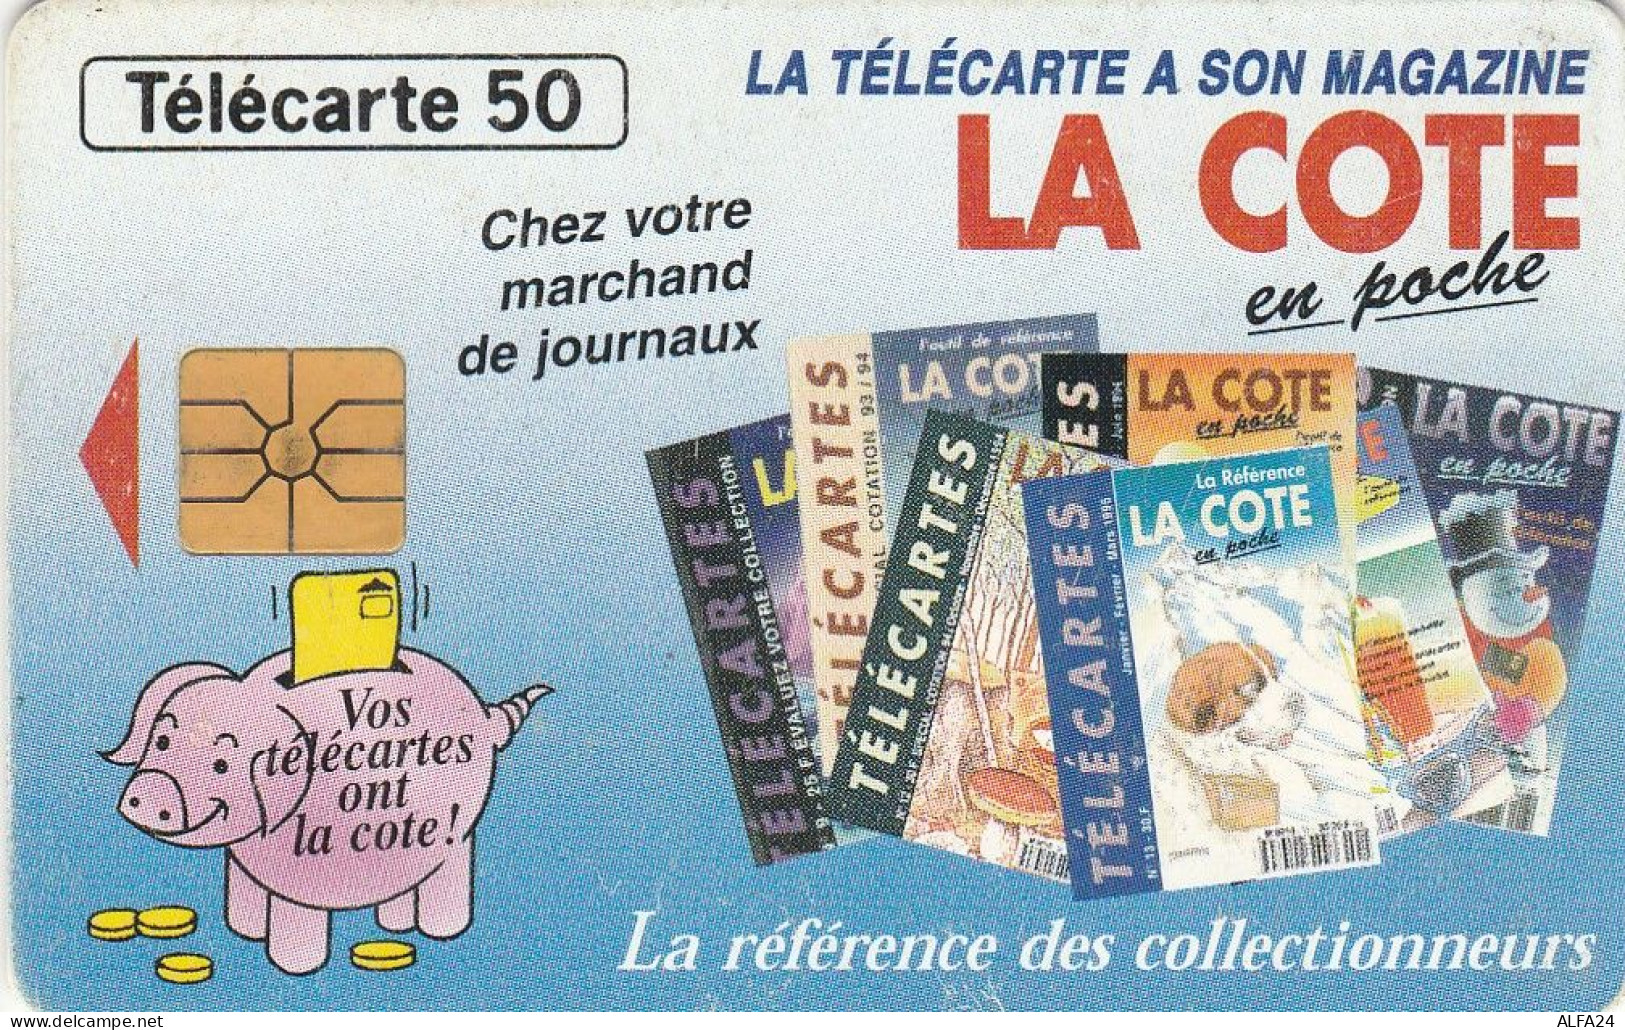 TELECARTE F530 COTE EN POCHE - 1995